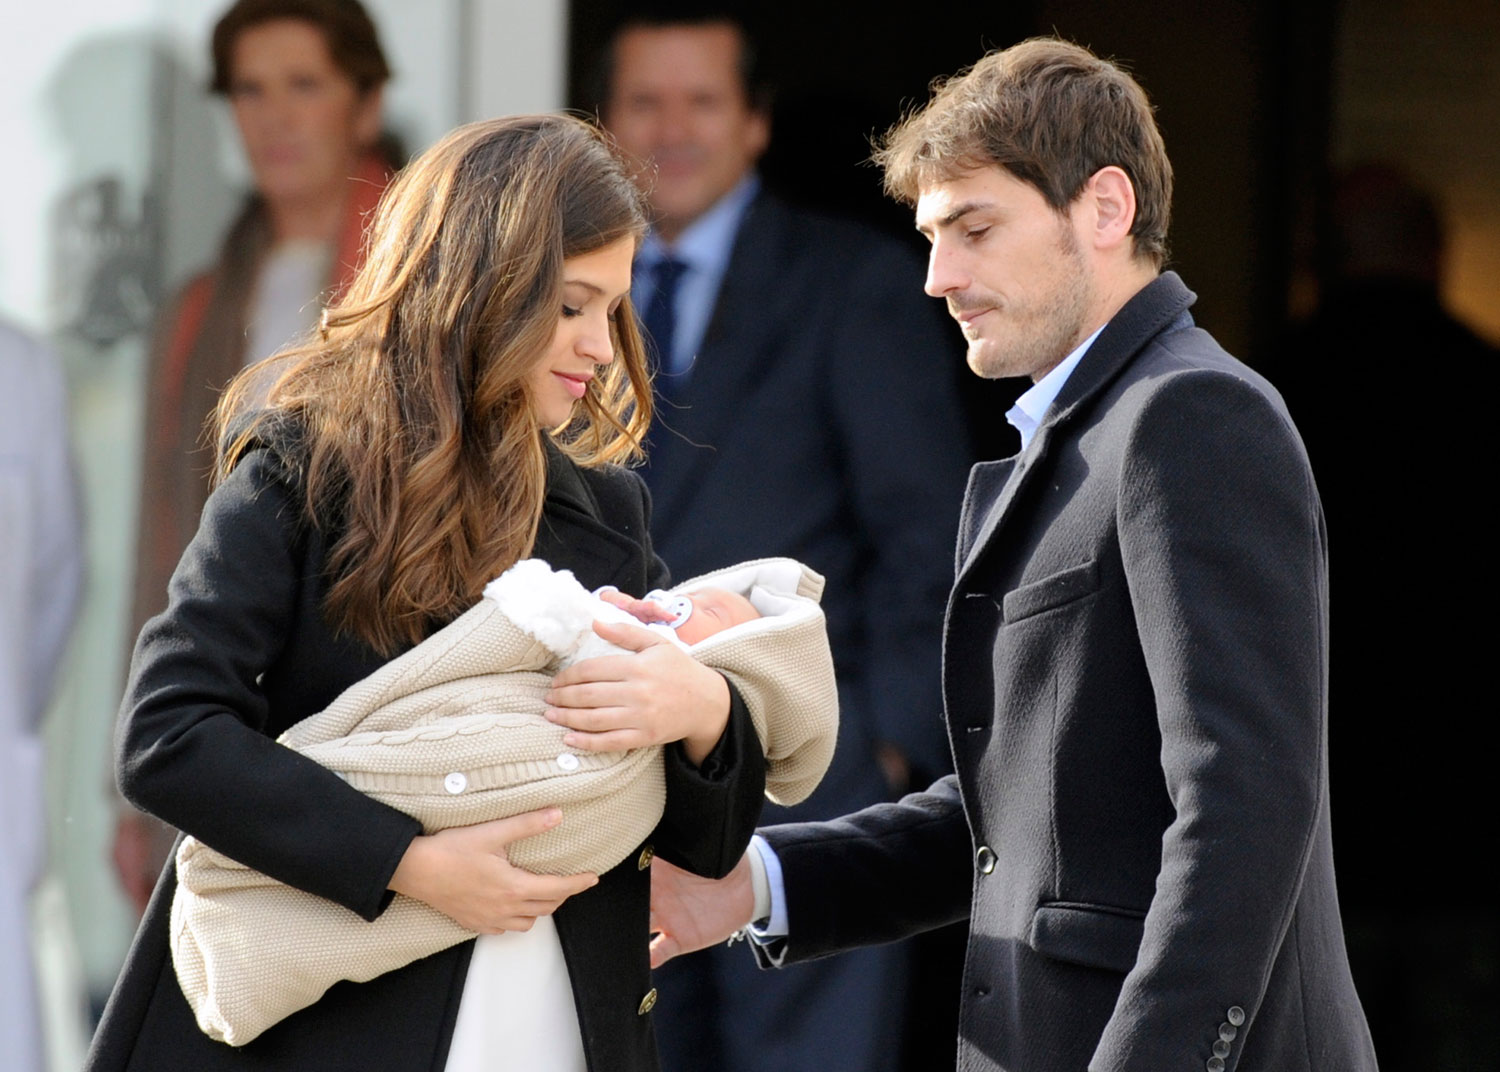 Sara Carbonero and Iker Casillas Present Their Newborn Child in Madrid - January 8, 2014